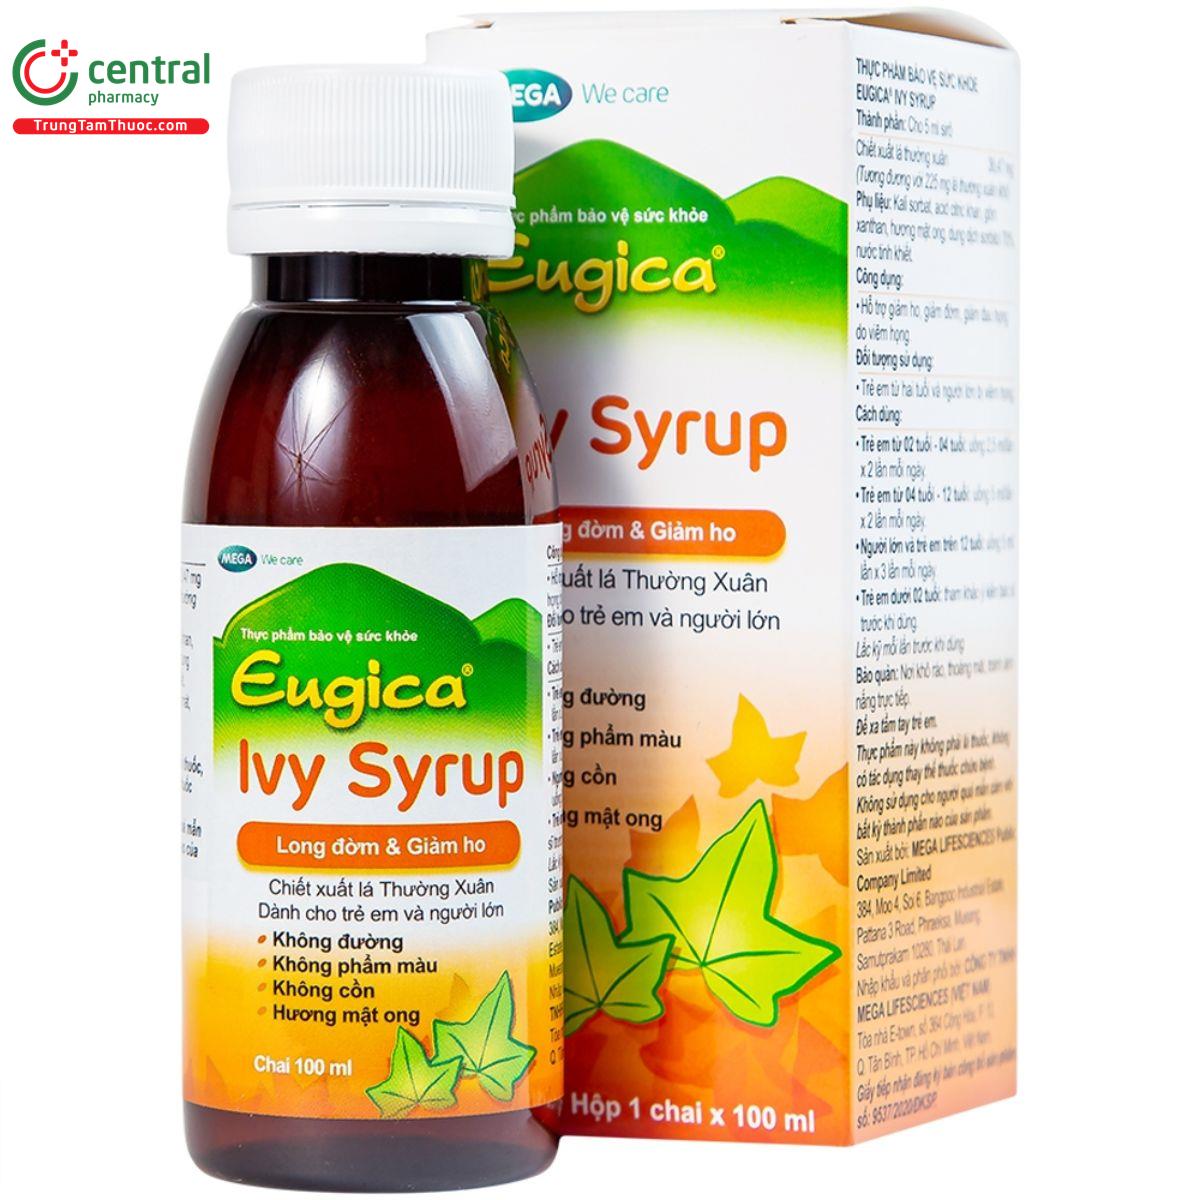 eugica ivy syrup 7 A0622